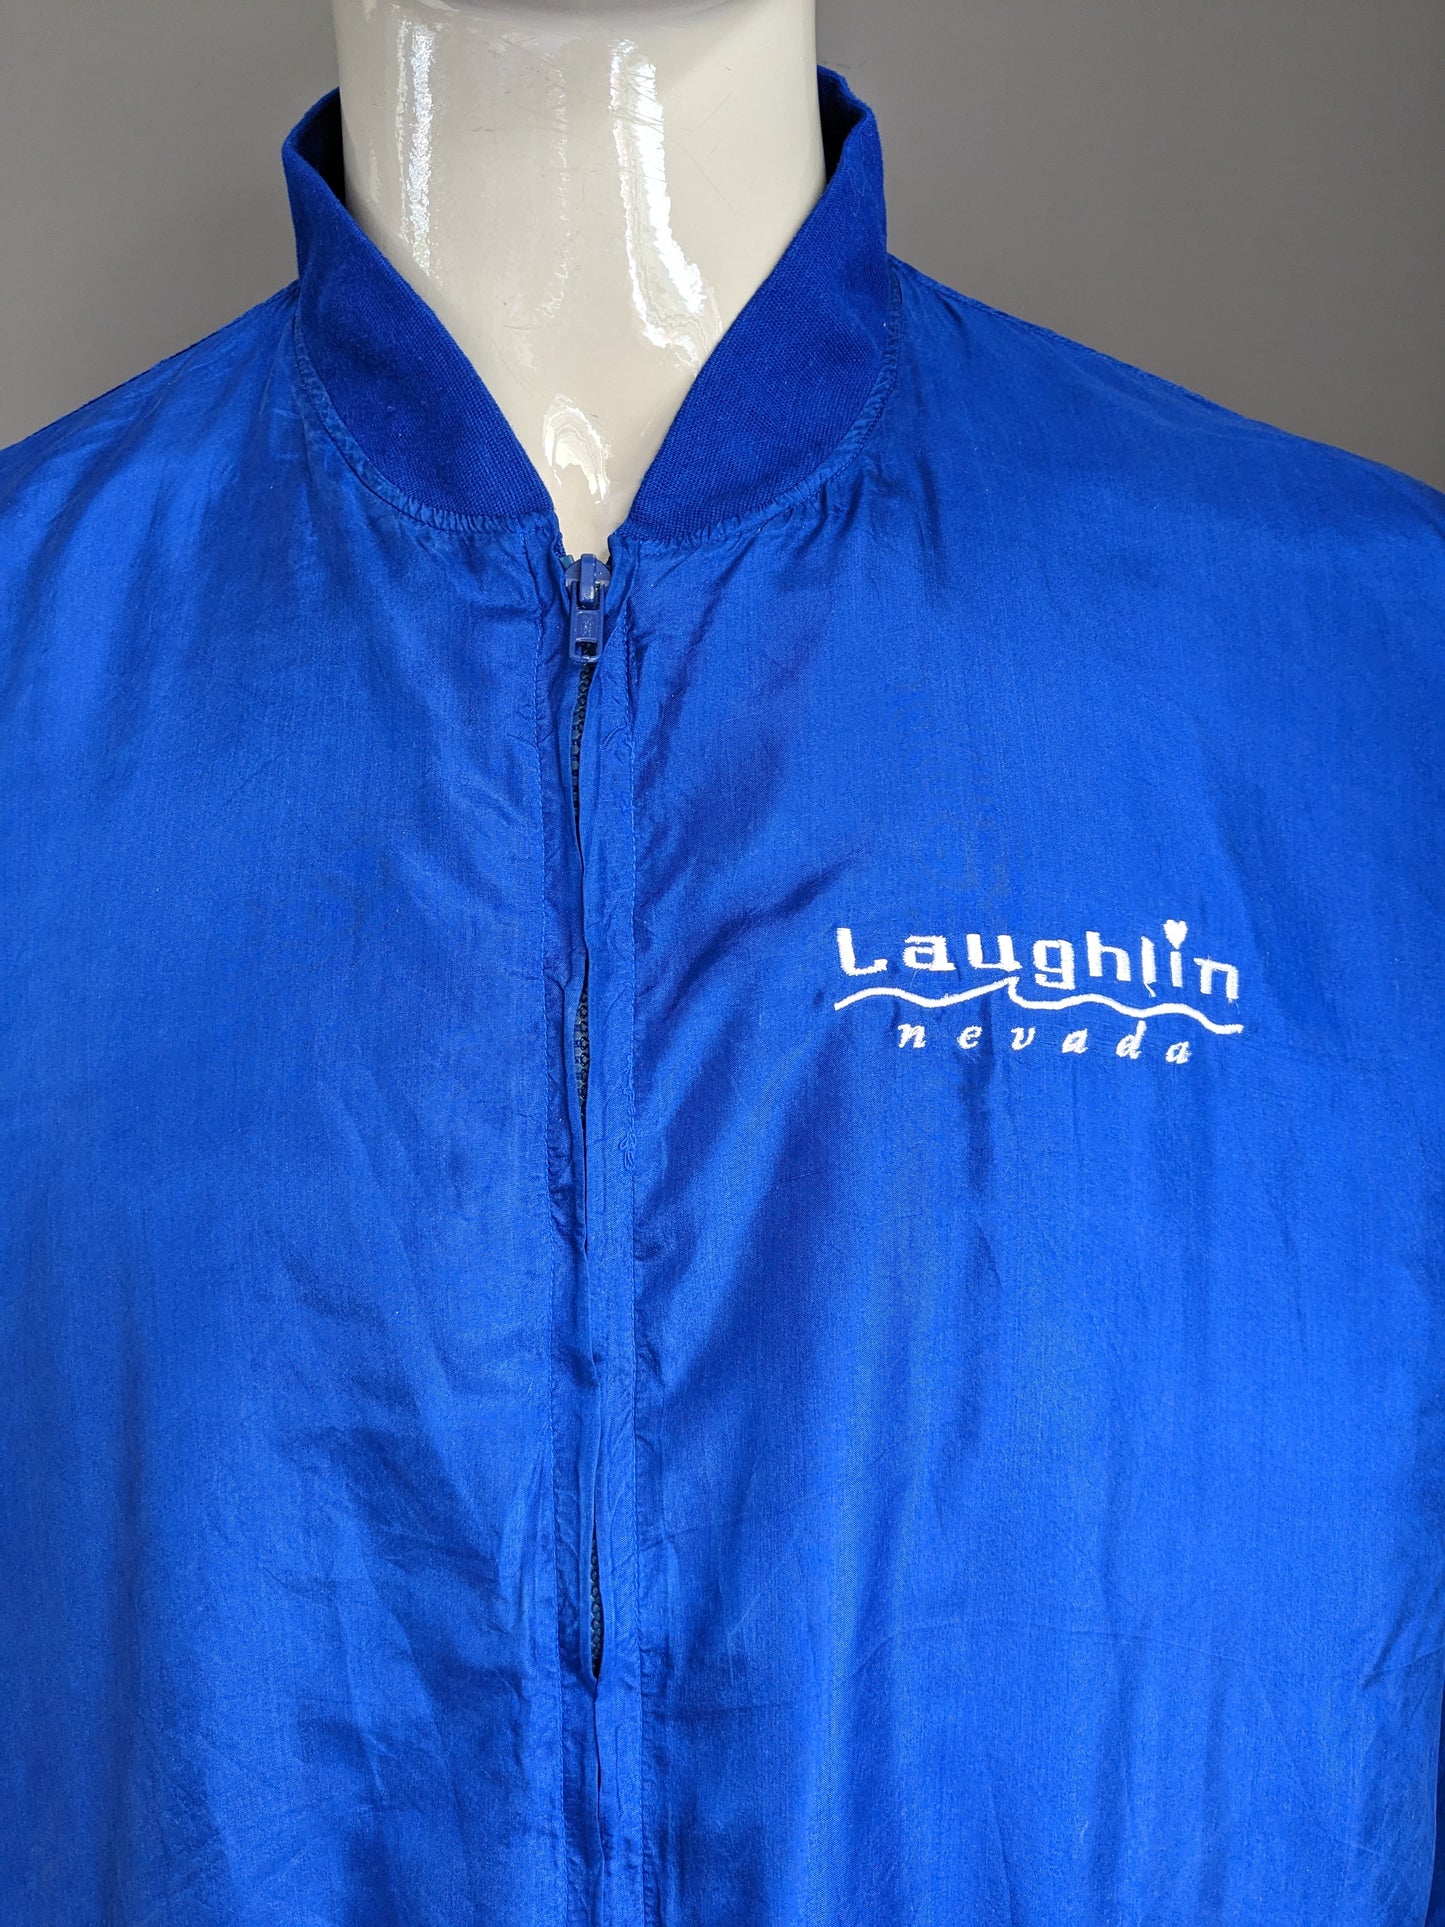 Vintage 80s-90s Active Silk Pure Sport Jack. "Laughlin Nevada". Blue colored. Size L / XL.